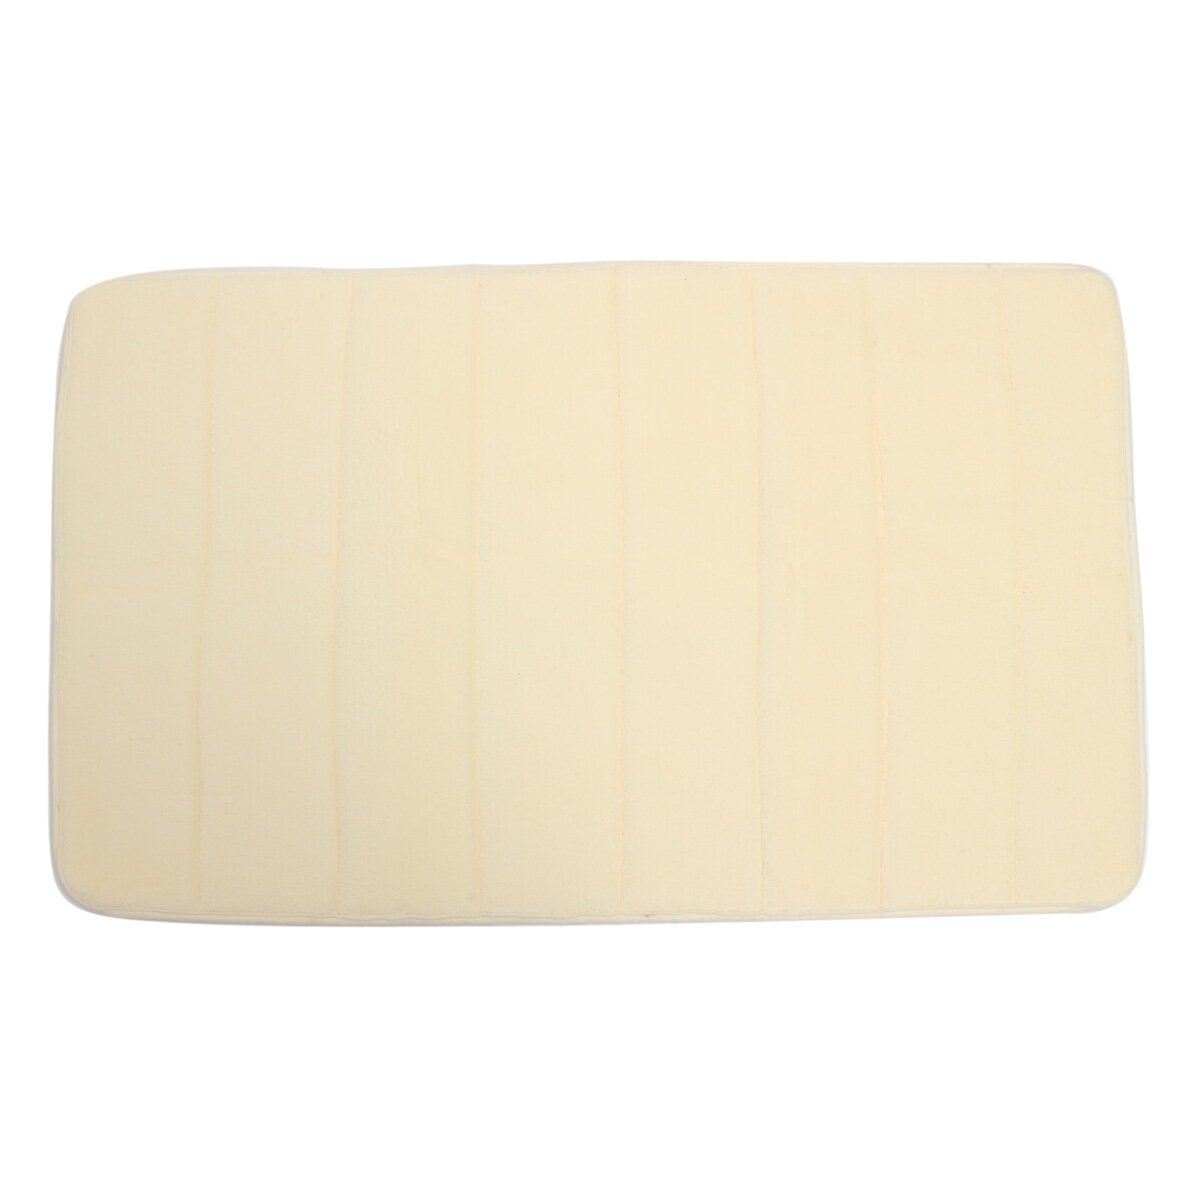 50x80cm Stripe Pattern Memory Foam Mat Absorbent Bathroom Anti Slip Carpet